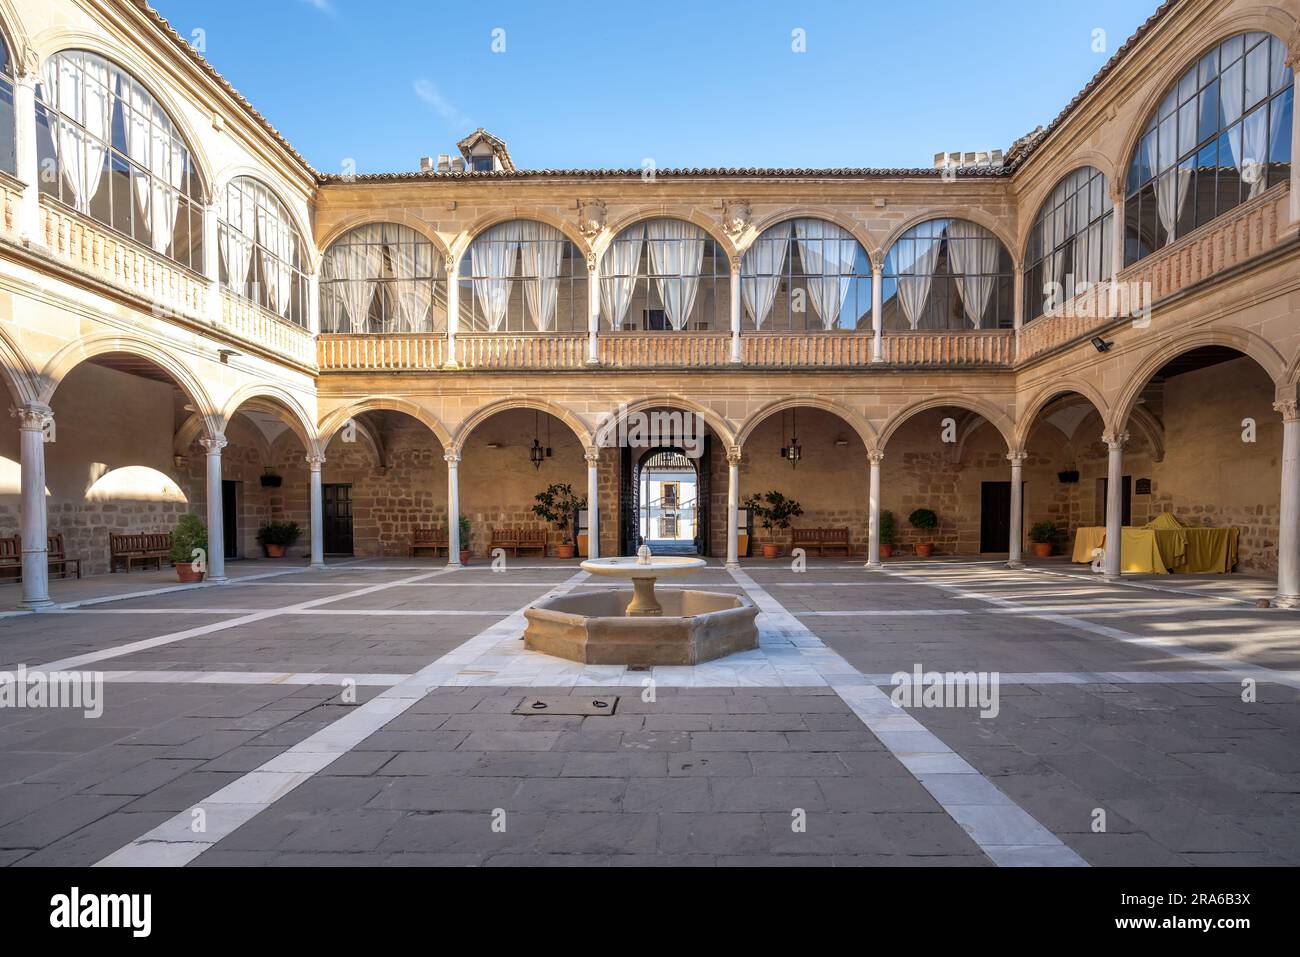 Santiago Hospital Courtyard - Ubeda, Jaen, Spanien Stockfoto